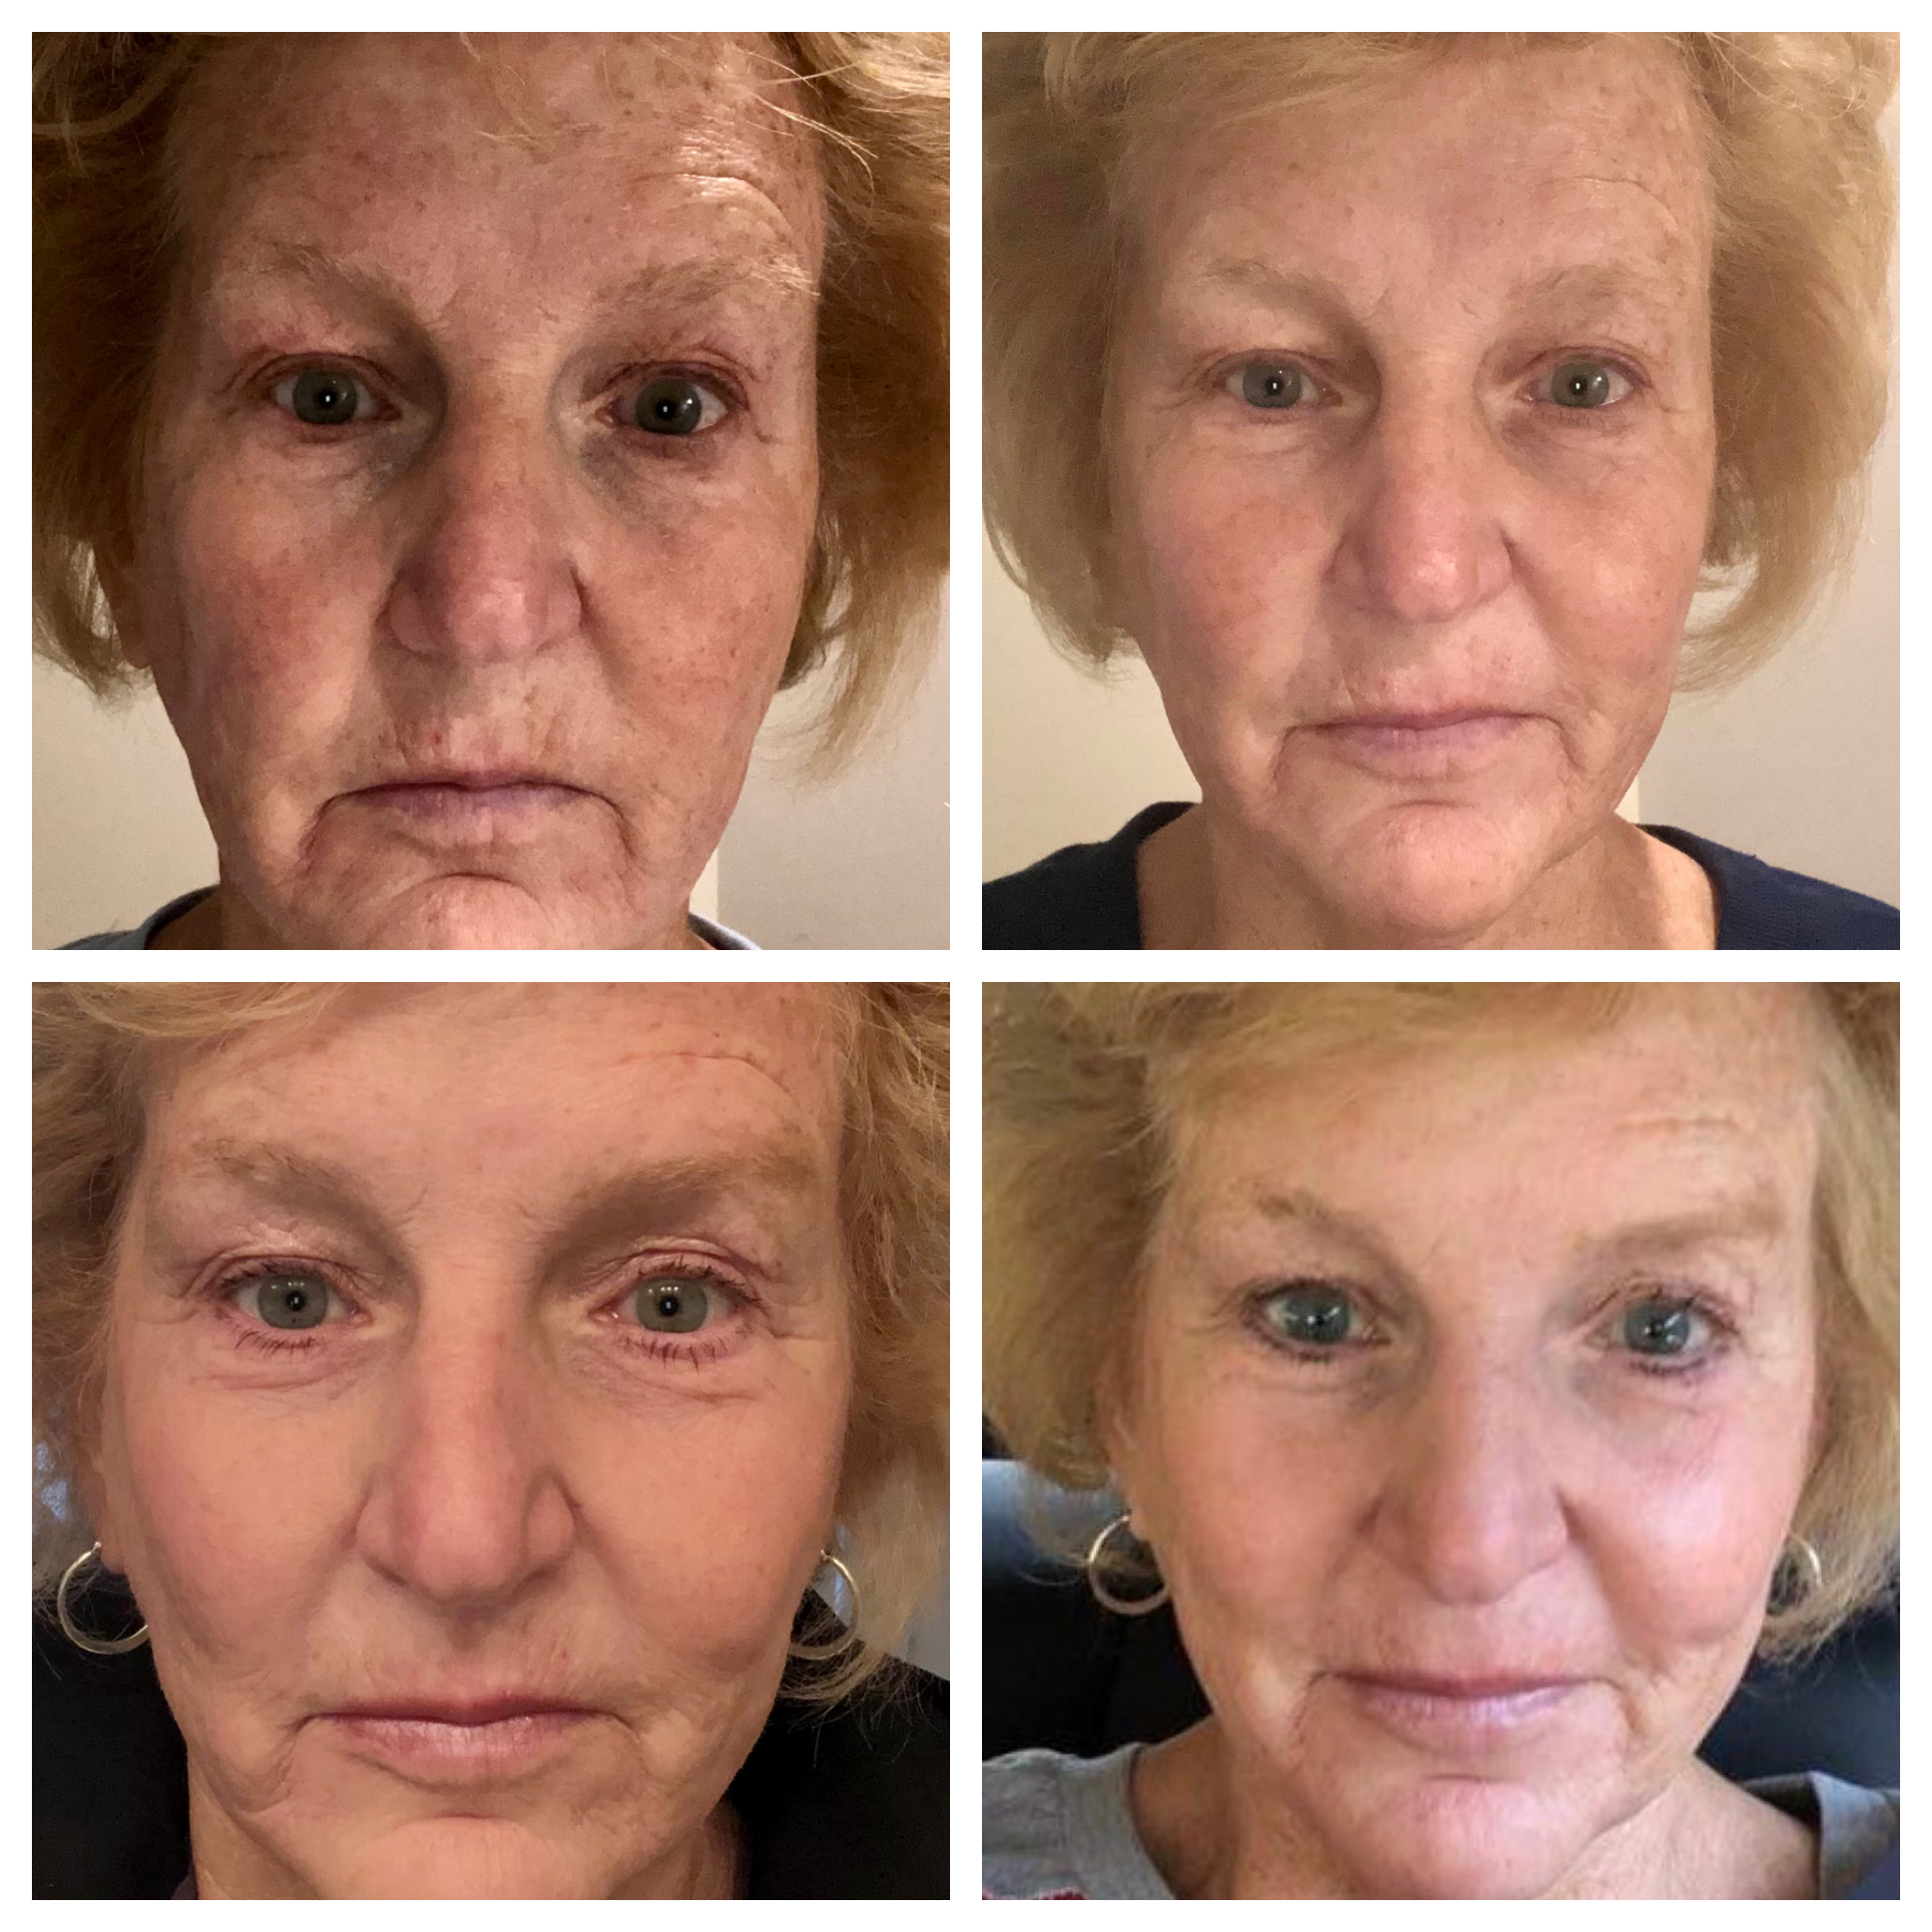 NeoGen Plasma Skin Regeneration before & after treatment photos in Leominster, MA | Opulent Aesthetics and Wellness